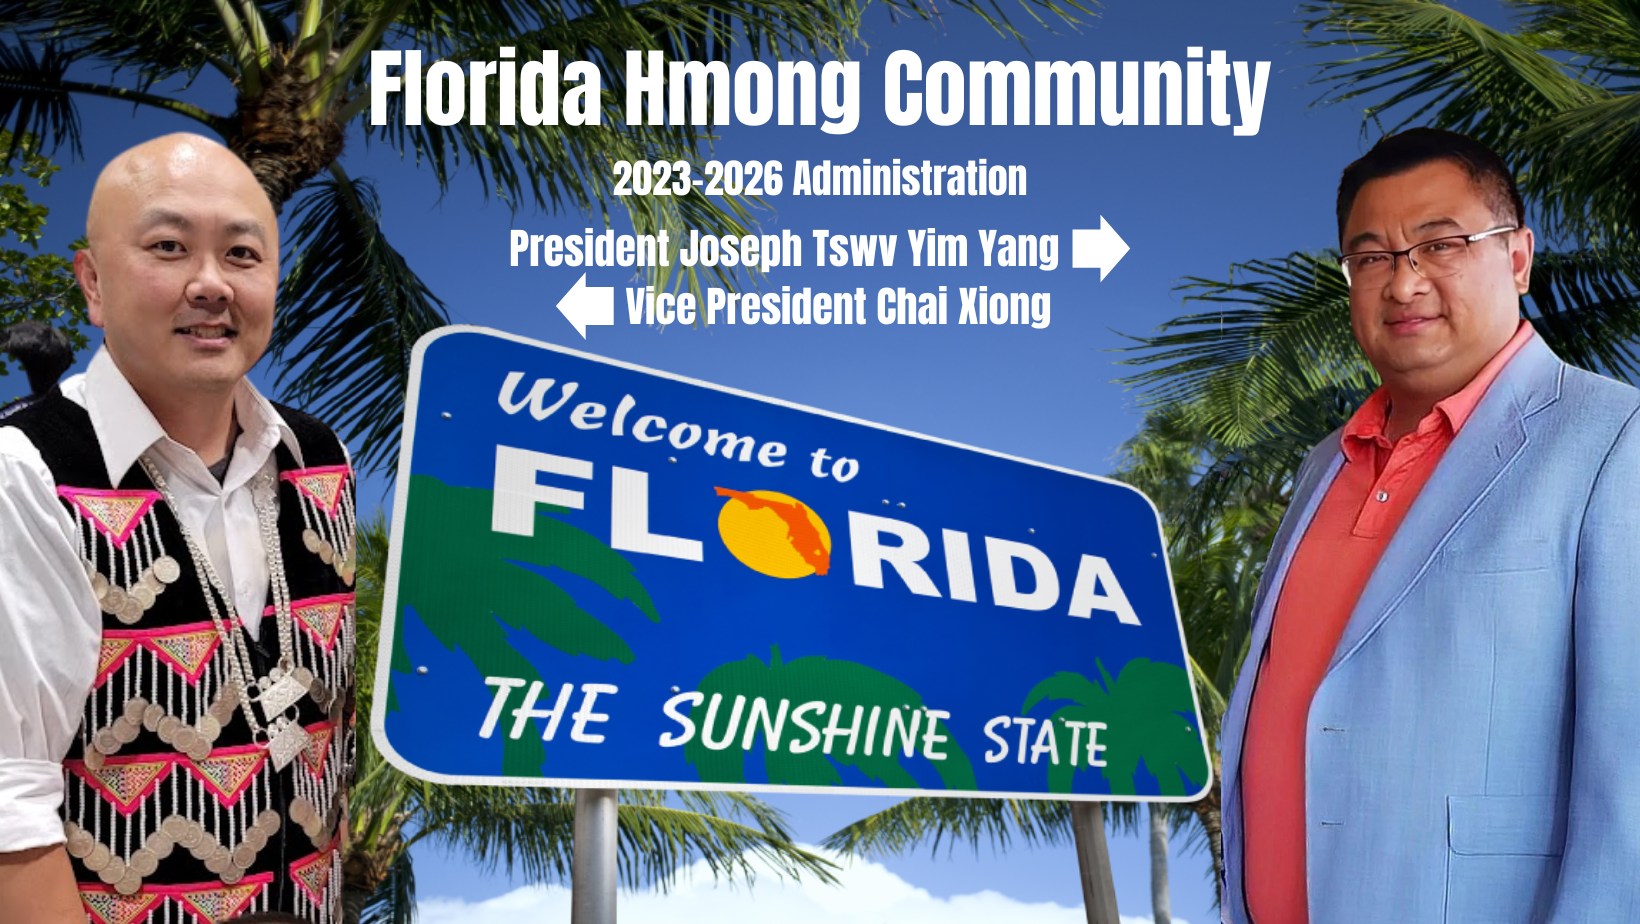 Florida Hmong Community 2023-2027 Inauguration